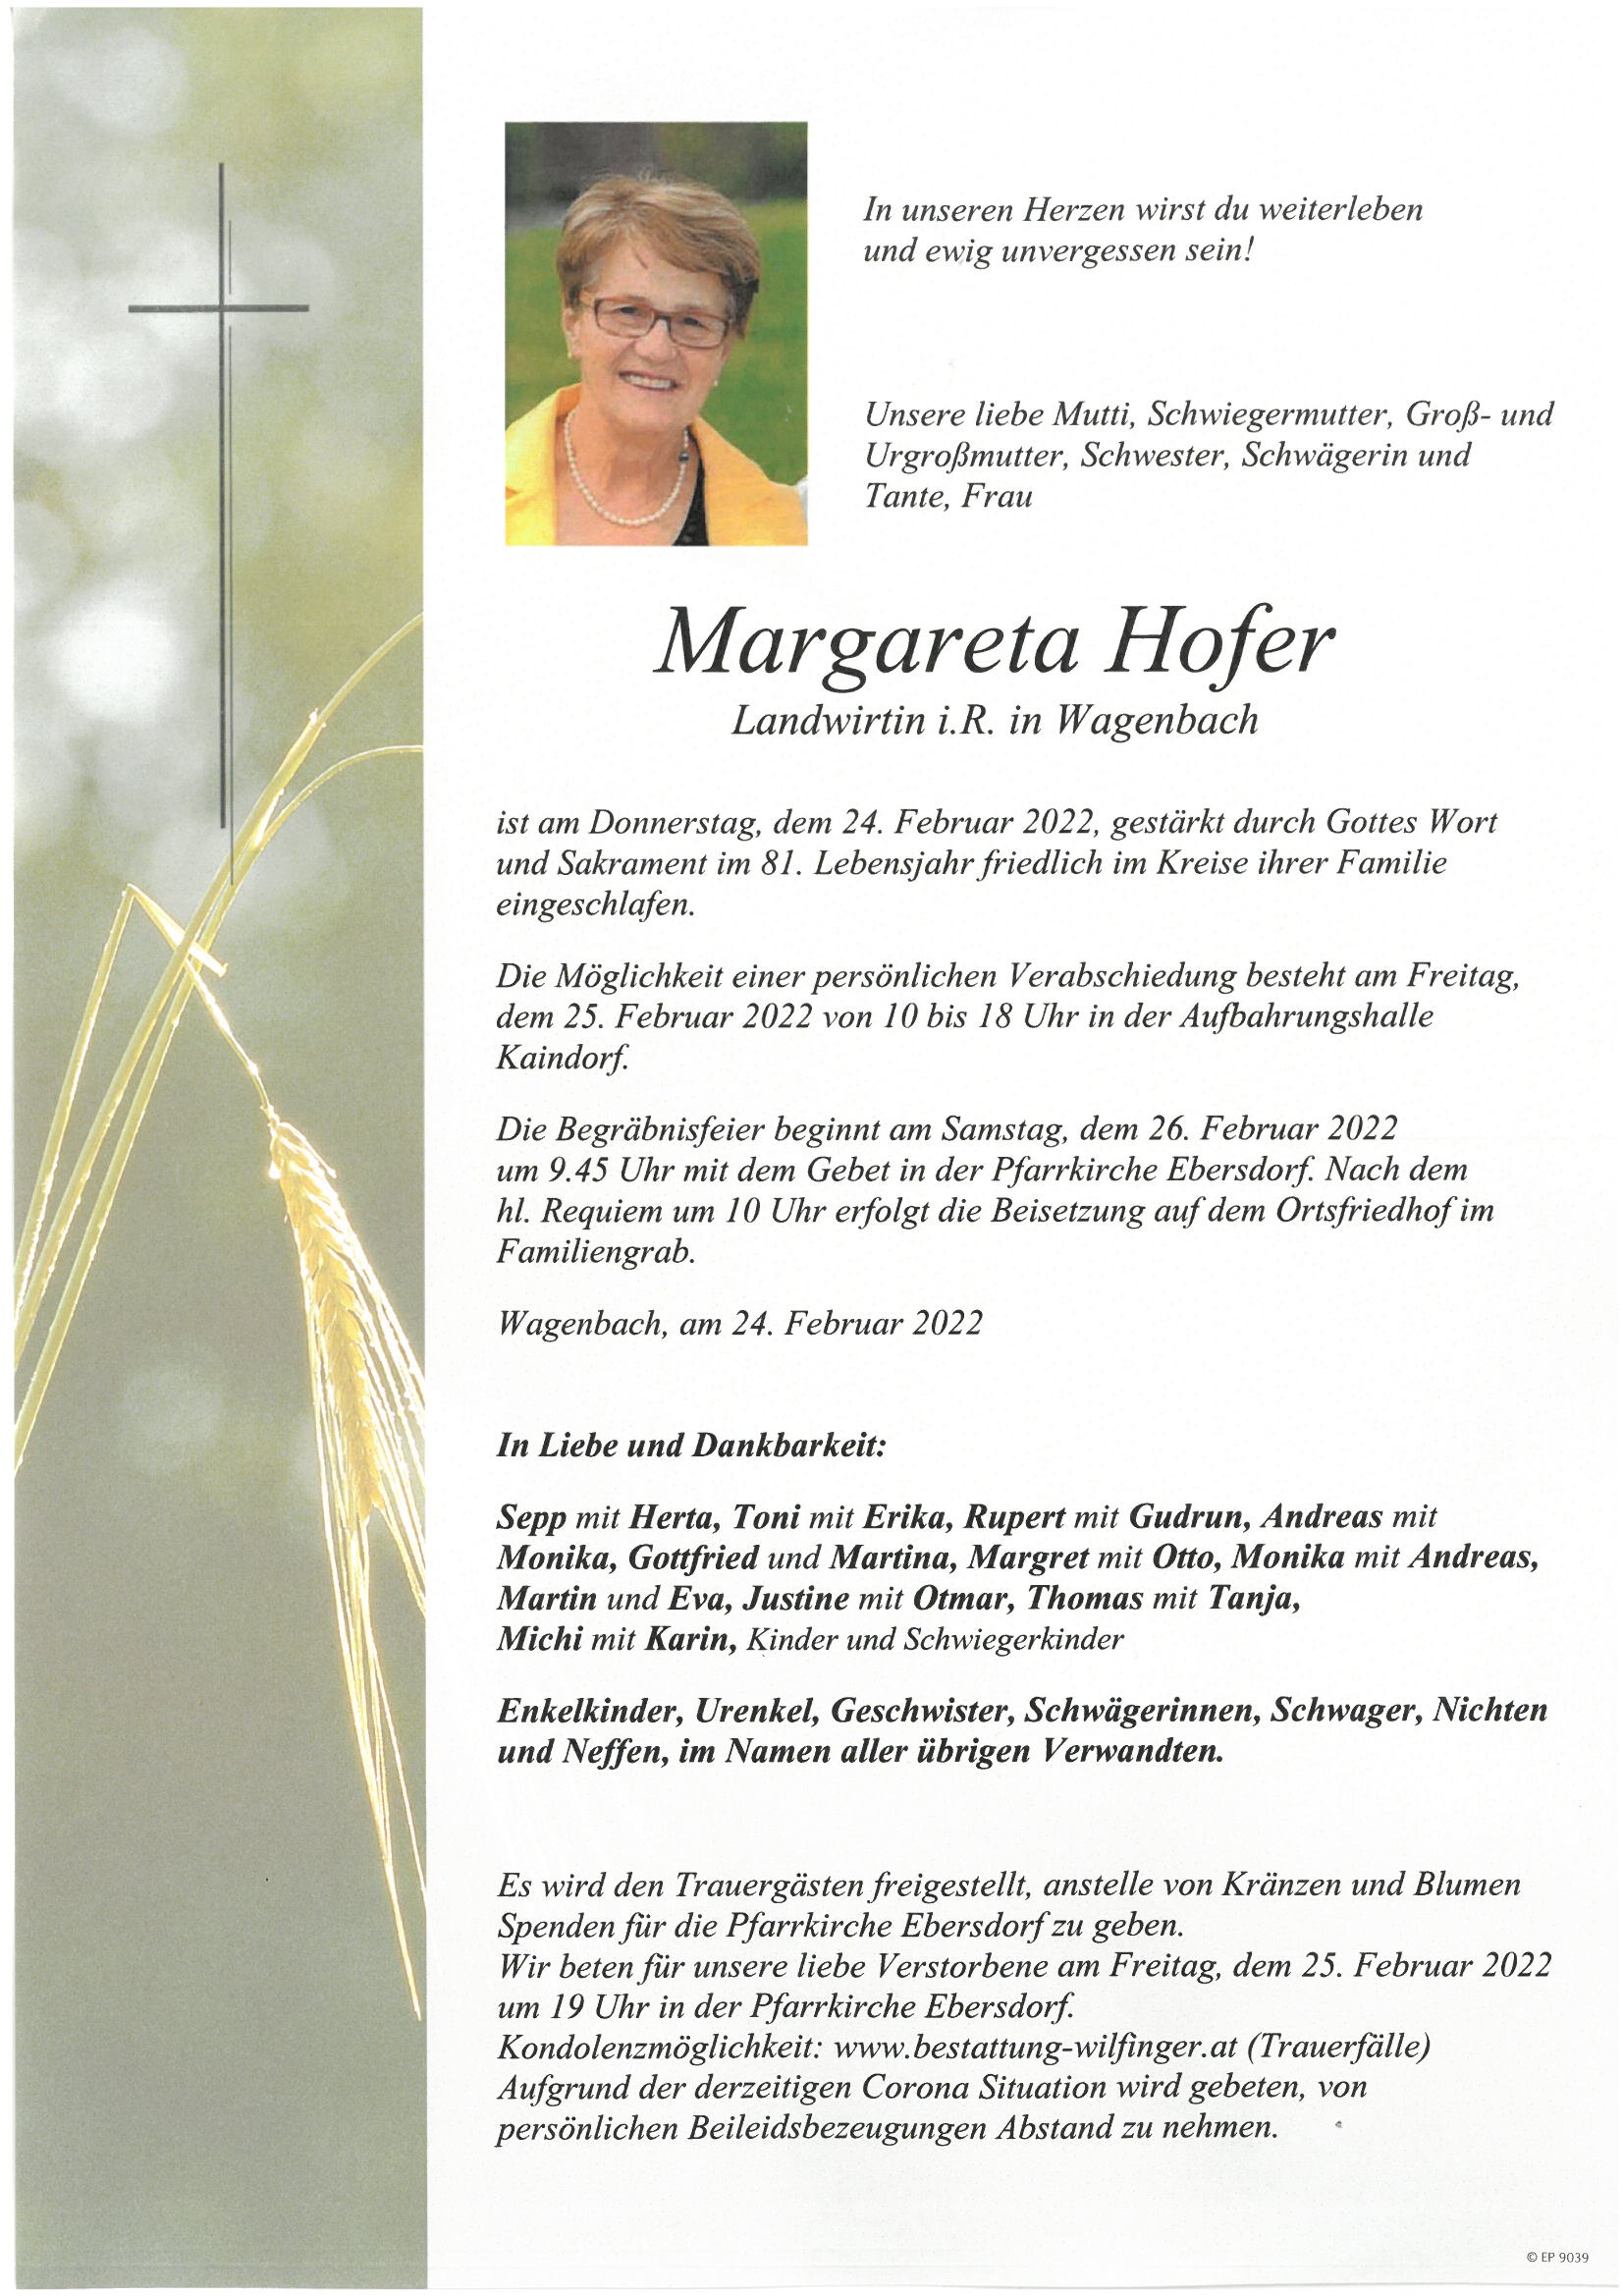 Margareta Hofer, Wagenbach